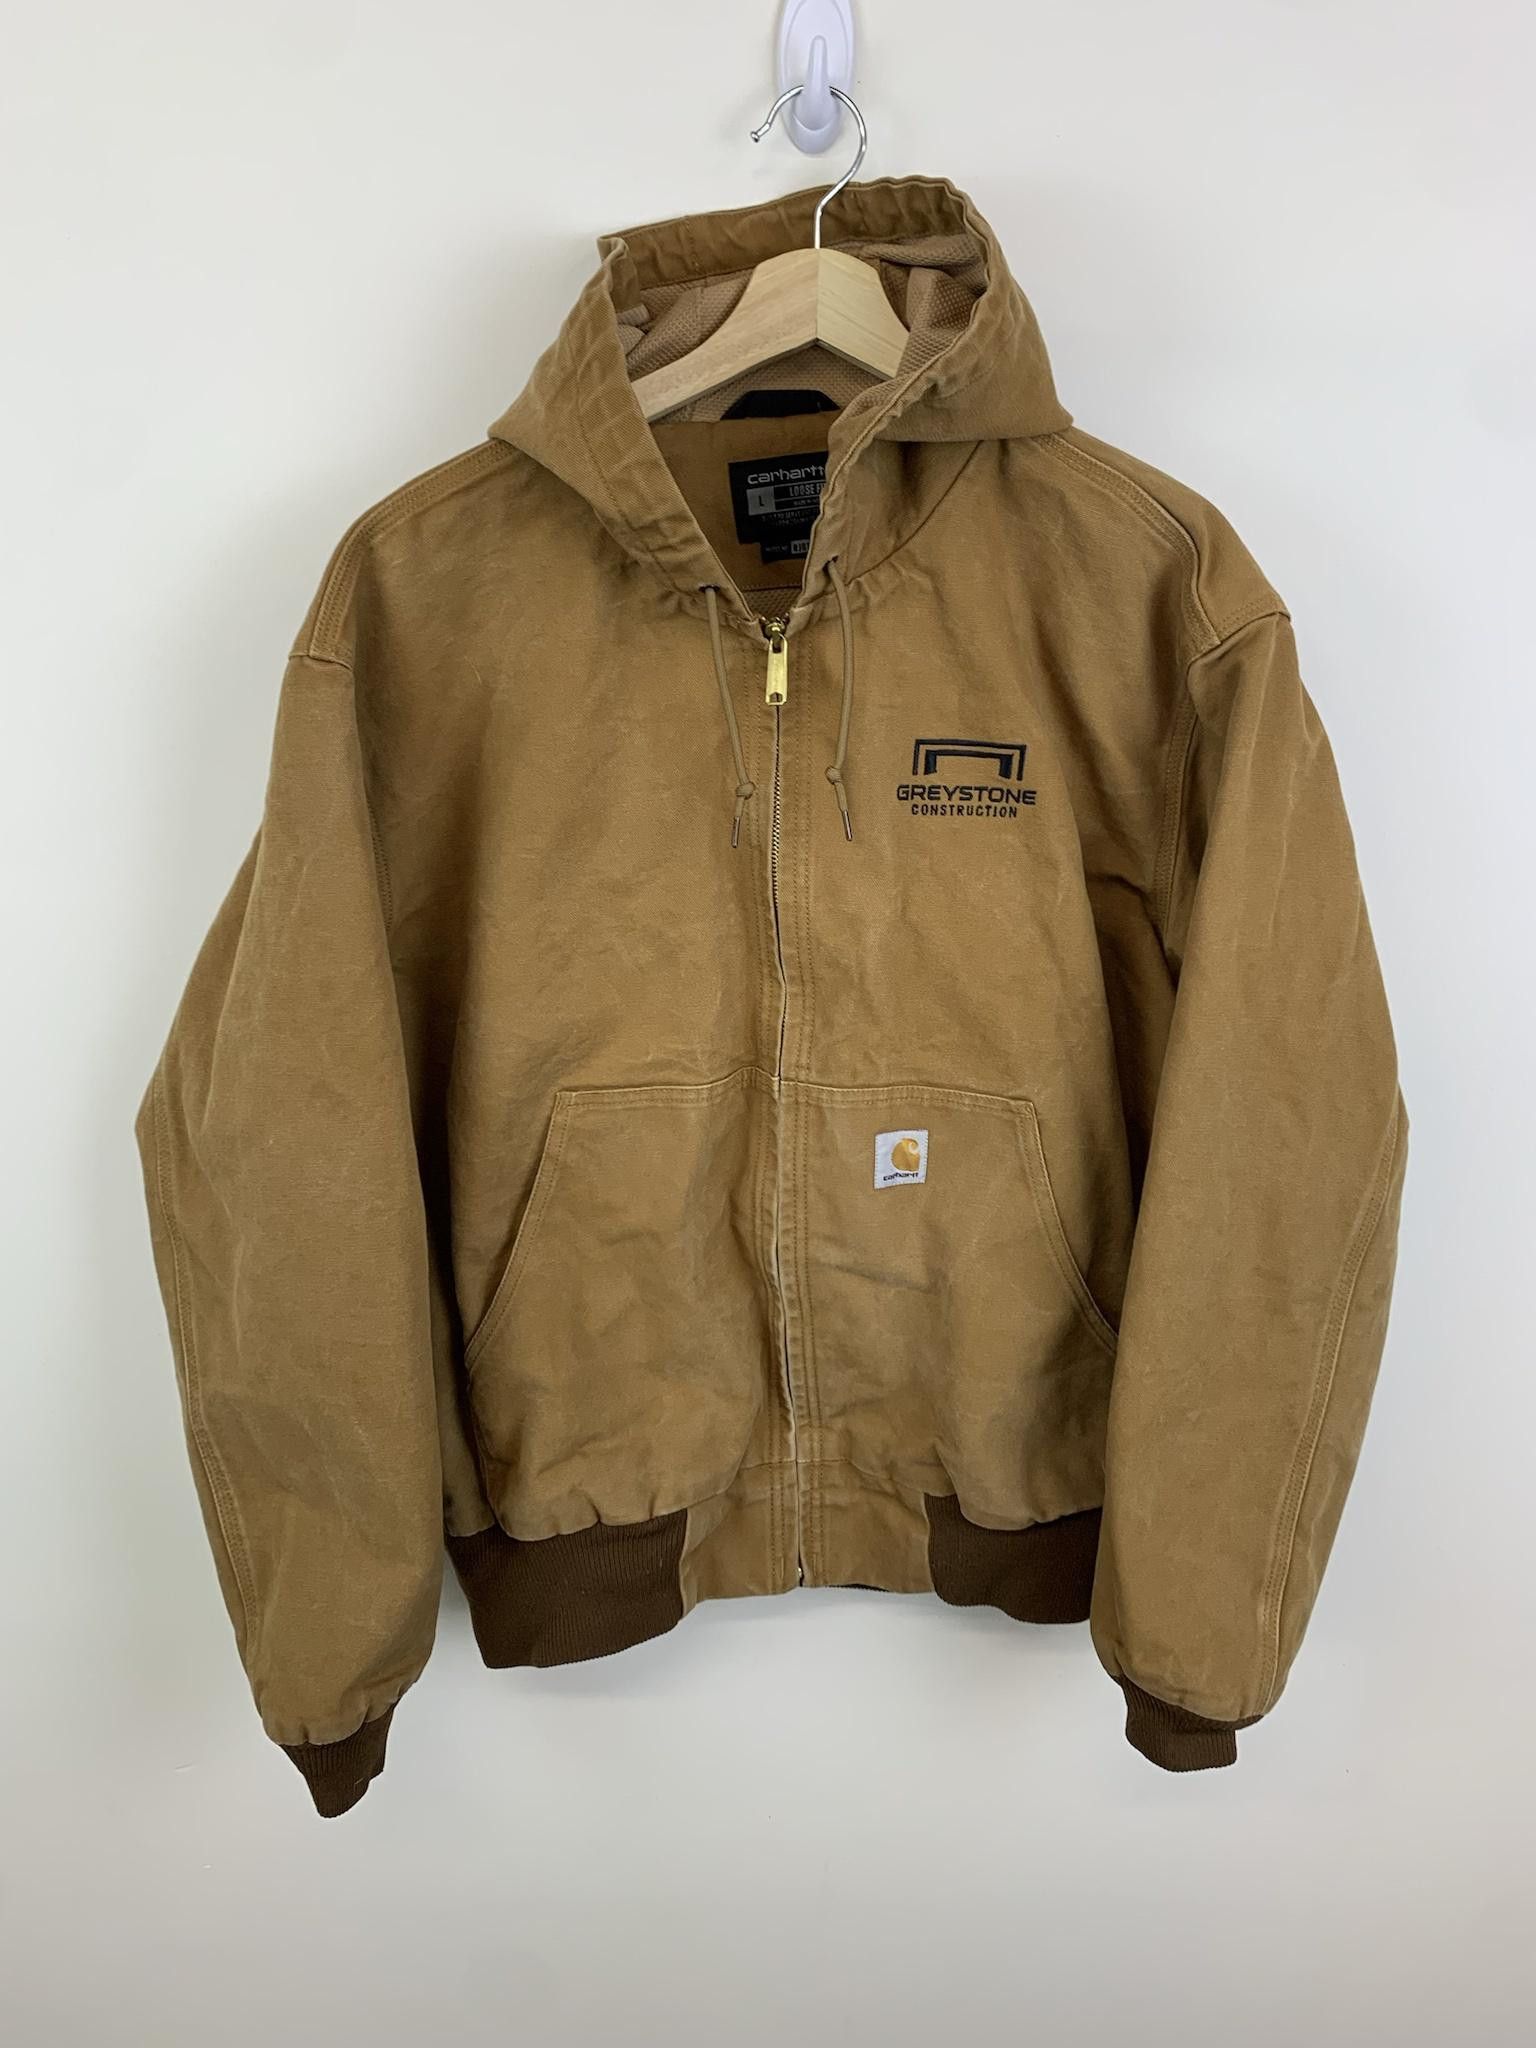 Vintage Vintage Carhartt Greystone Construction Hooded Active Jacket Size US L / EU 52-54 / 3 - 1 Preview